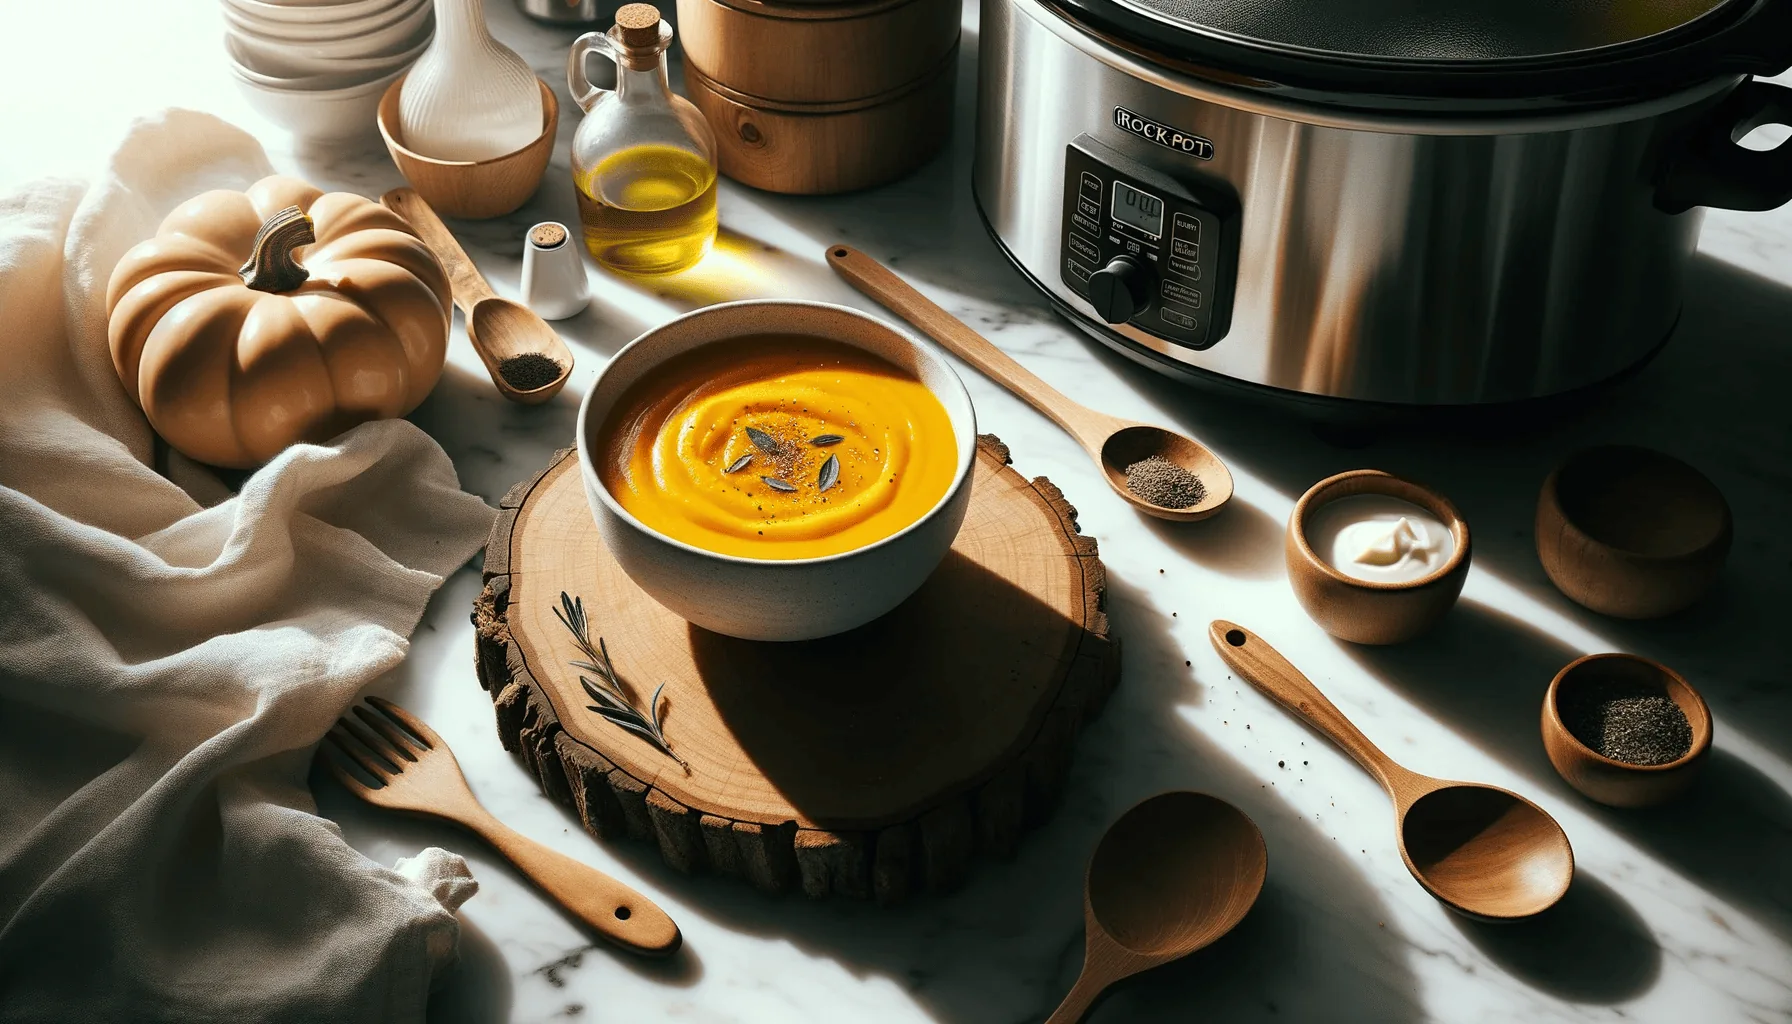 Crock-Pot butternut squash soup recipe, ready to serve